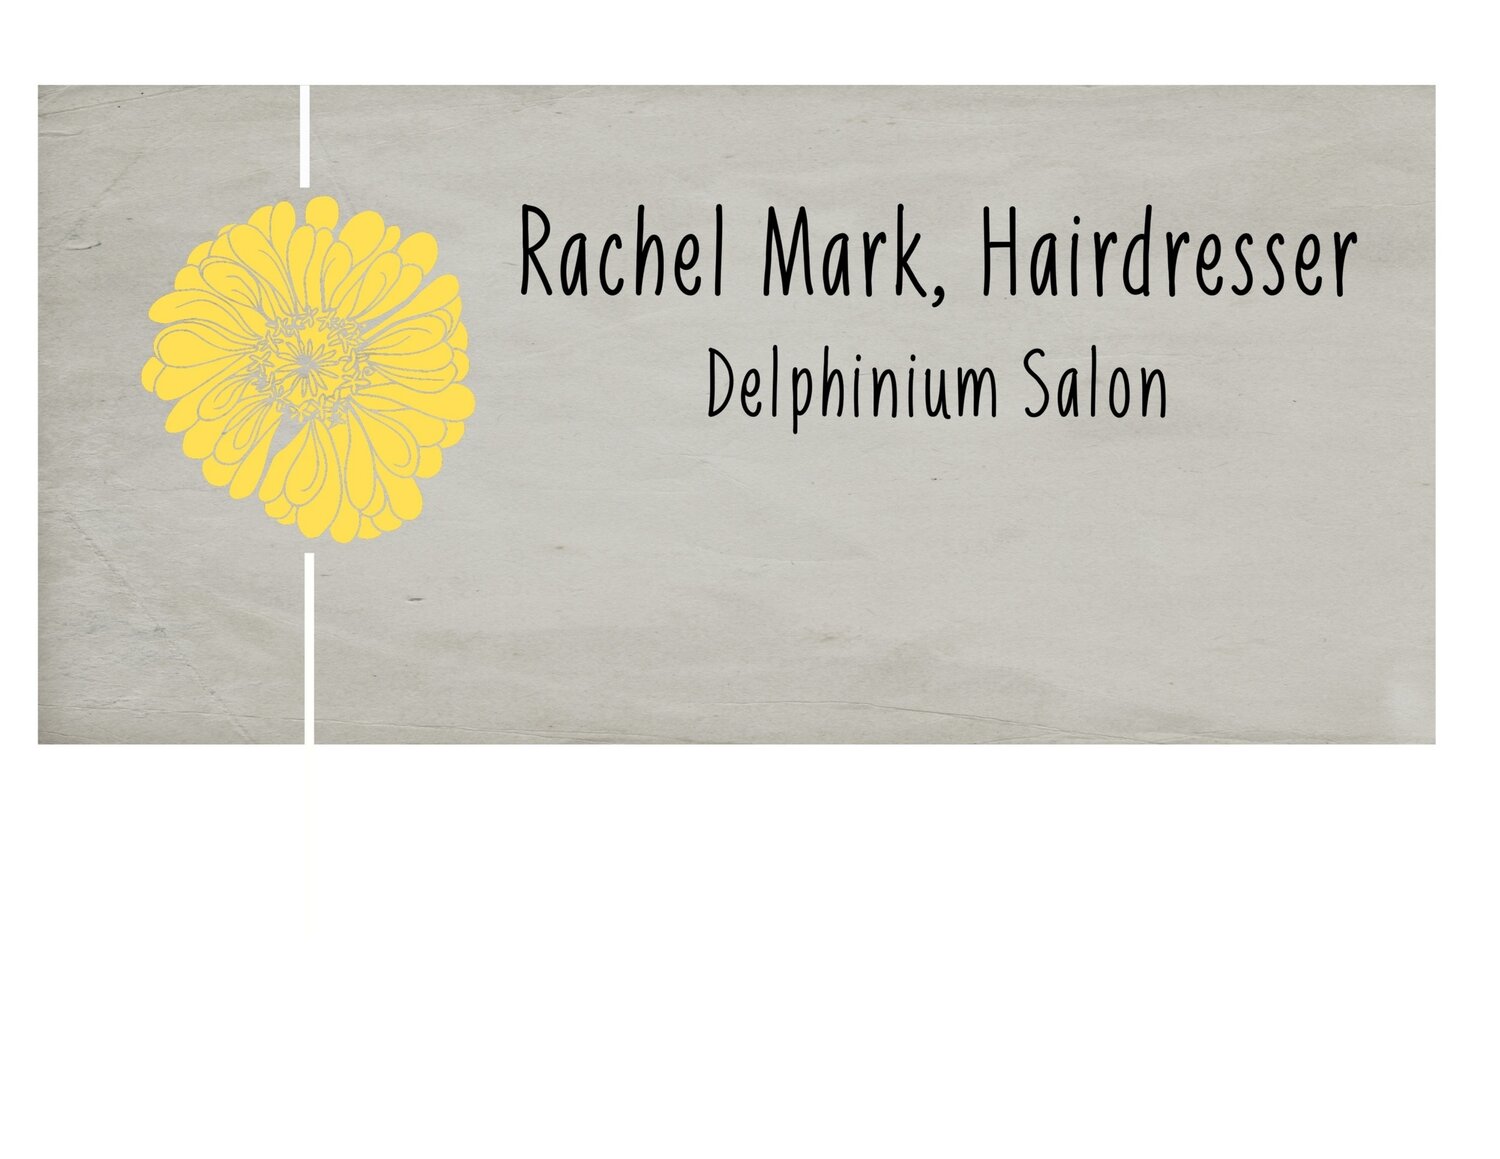 Rachel Mark Hairdresser, Delphinium salon